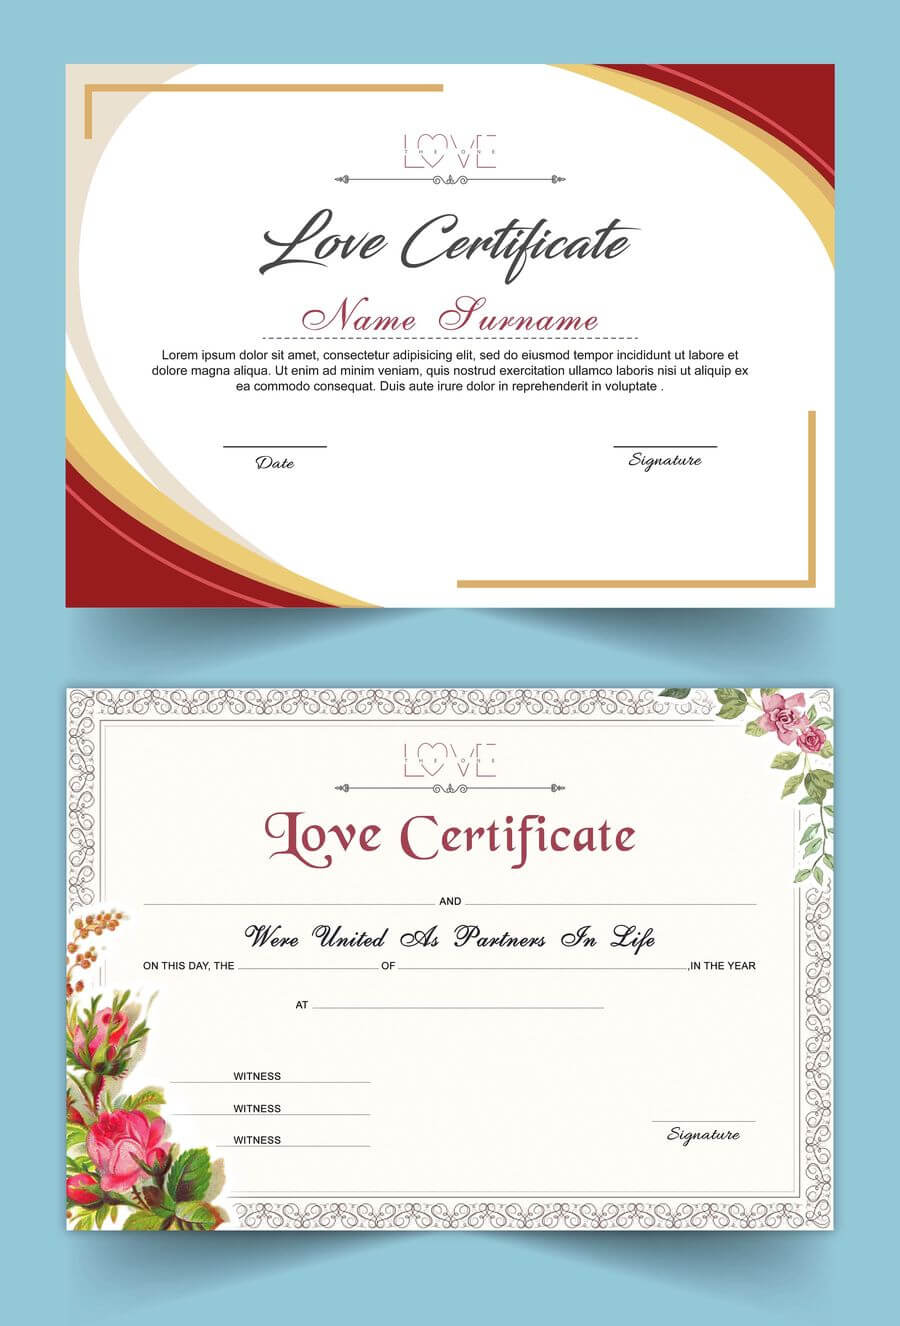 Entry #15Satishandsurabhi For Design A Love Certificate Regarding Love Certificate Templates